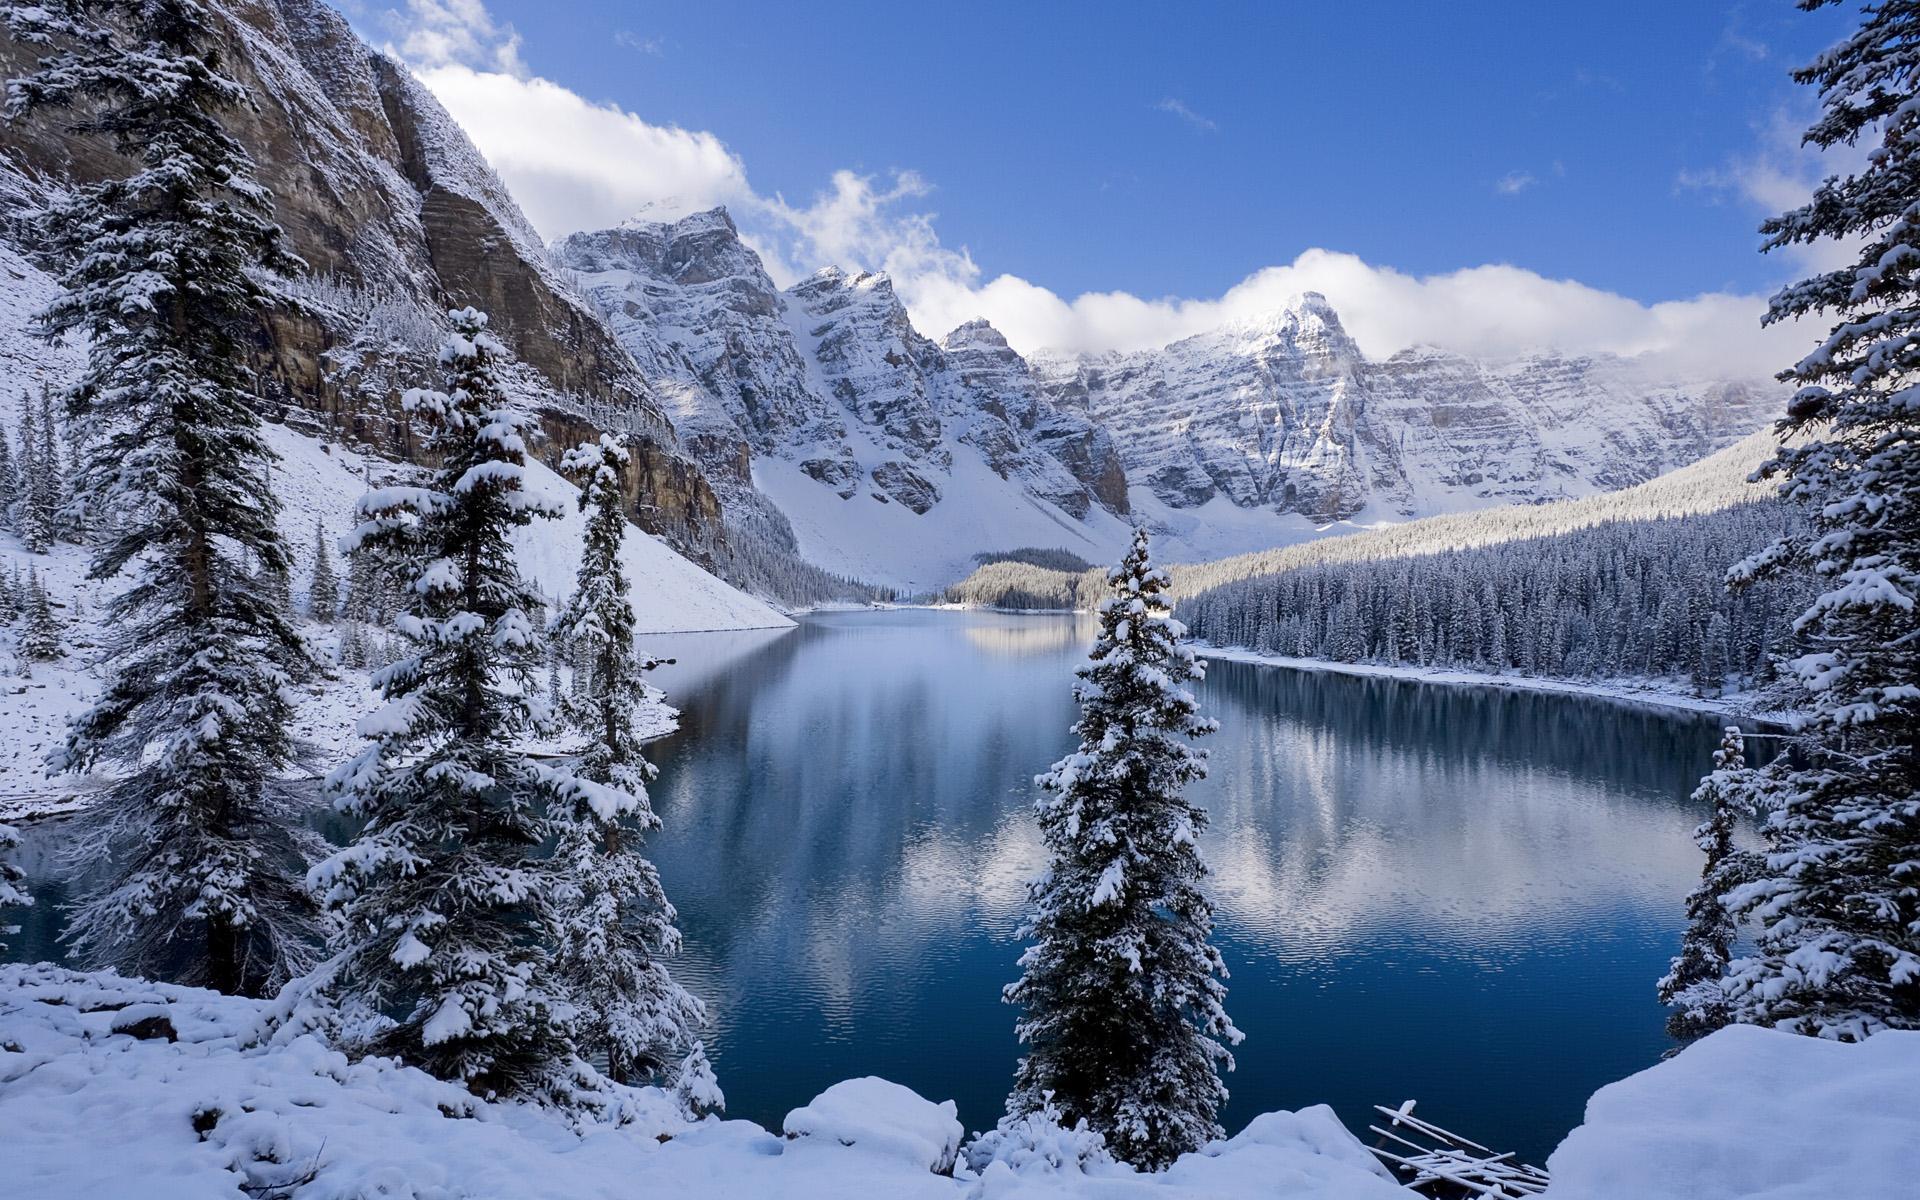 Winter Snow, The beautiful winter landscape. HD Image Wallpaper